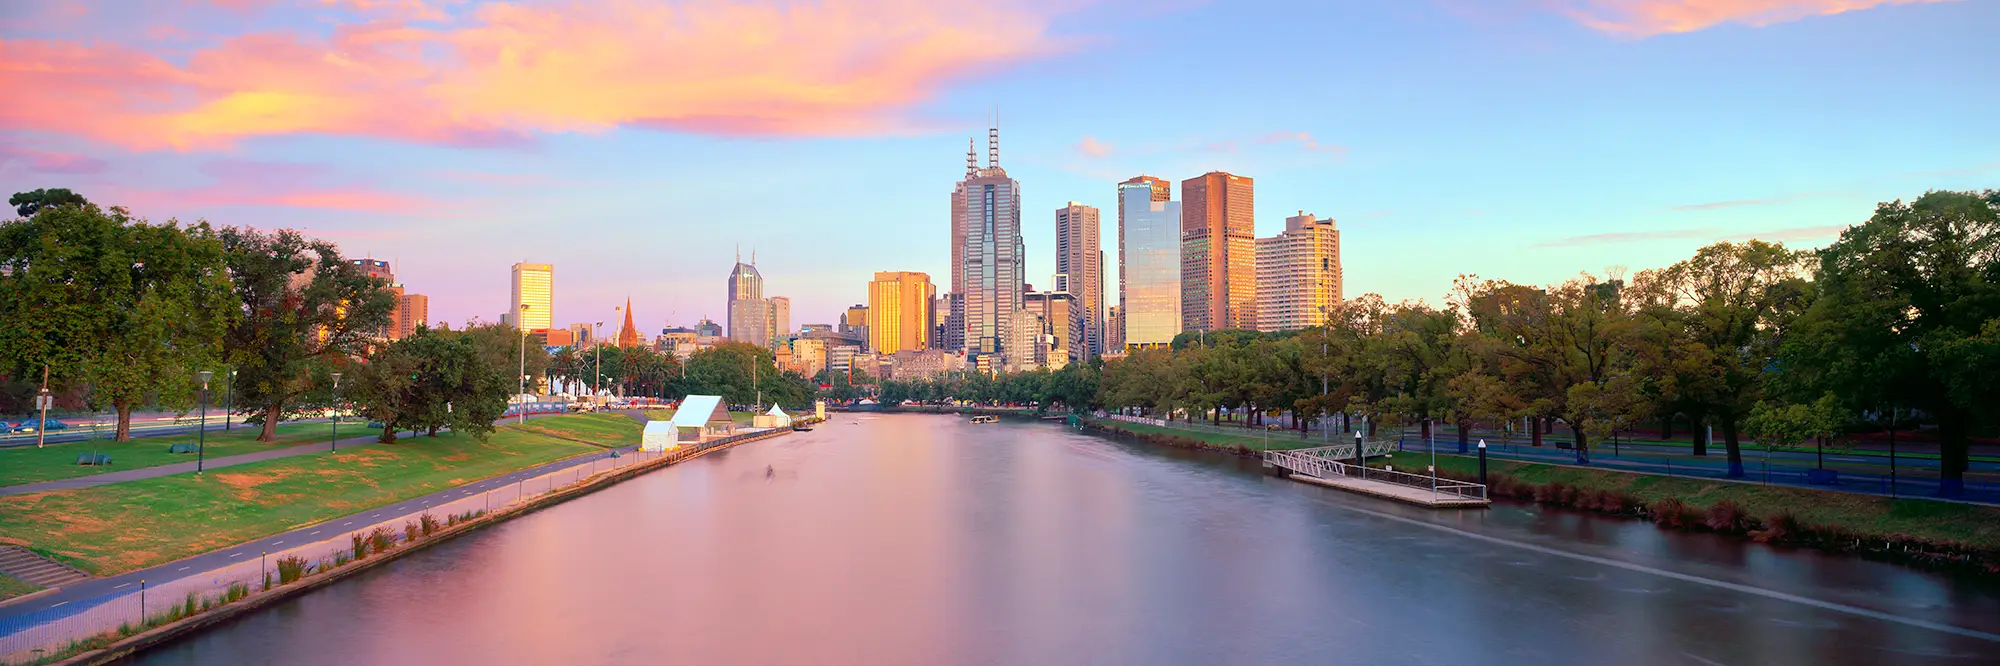 Melbourne City Sunrise Yarra River Photo